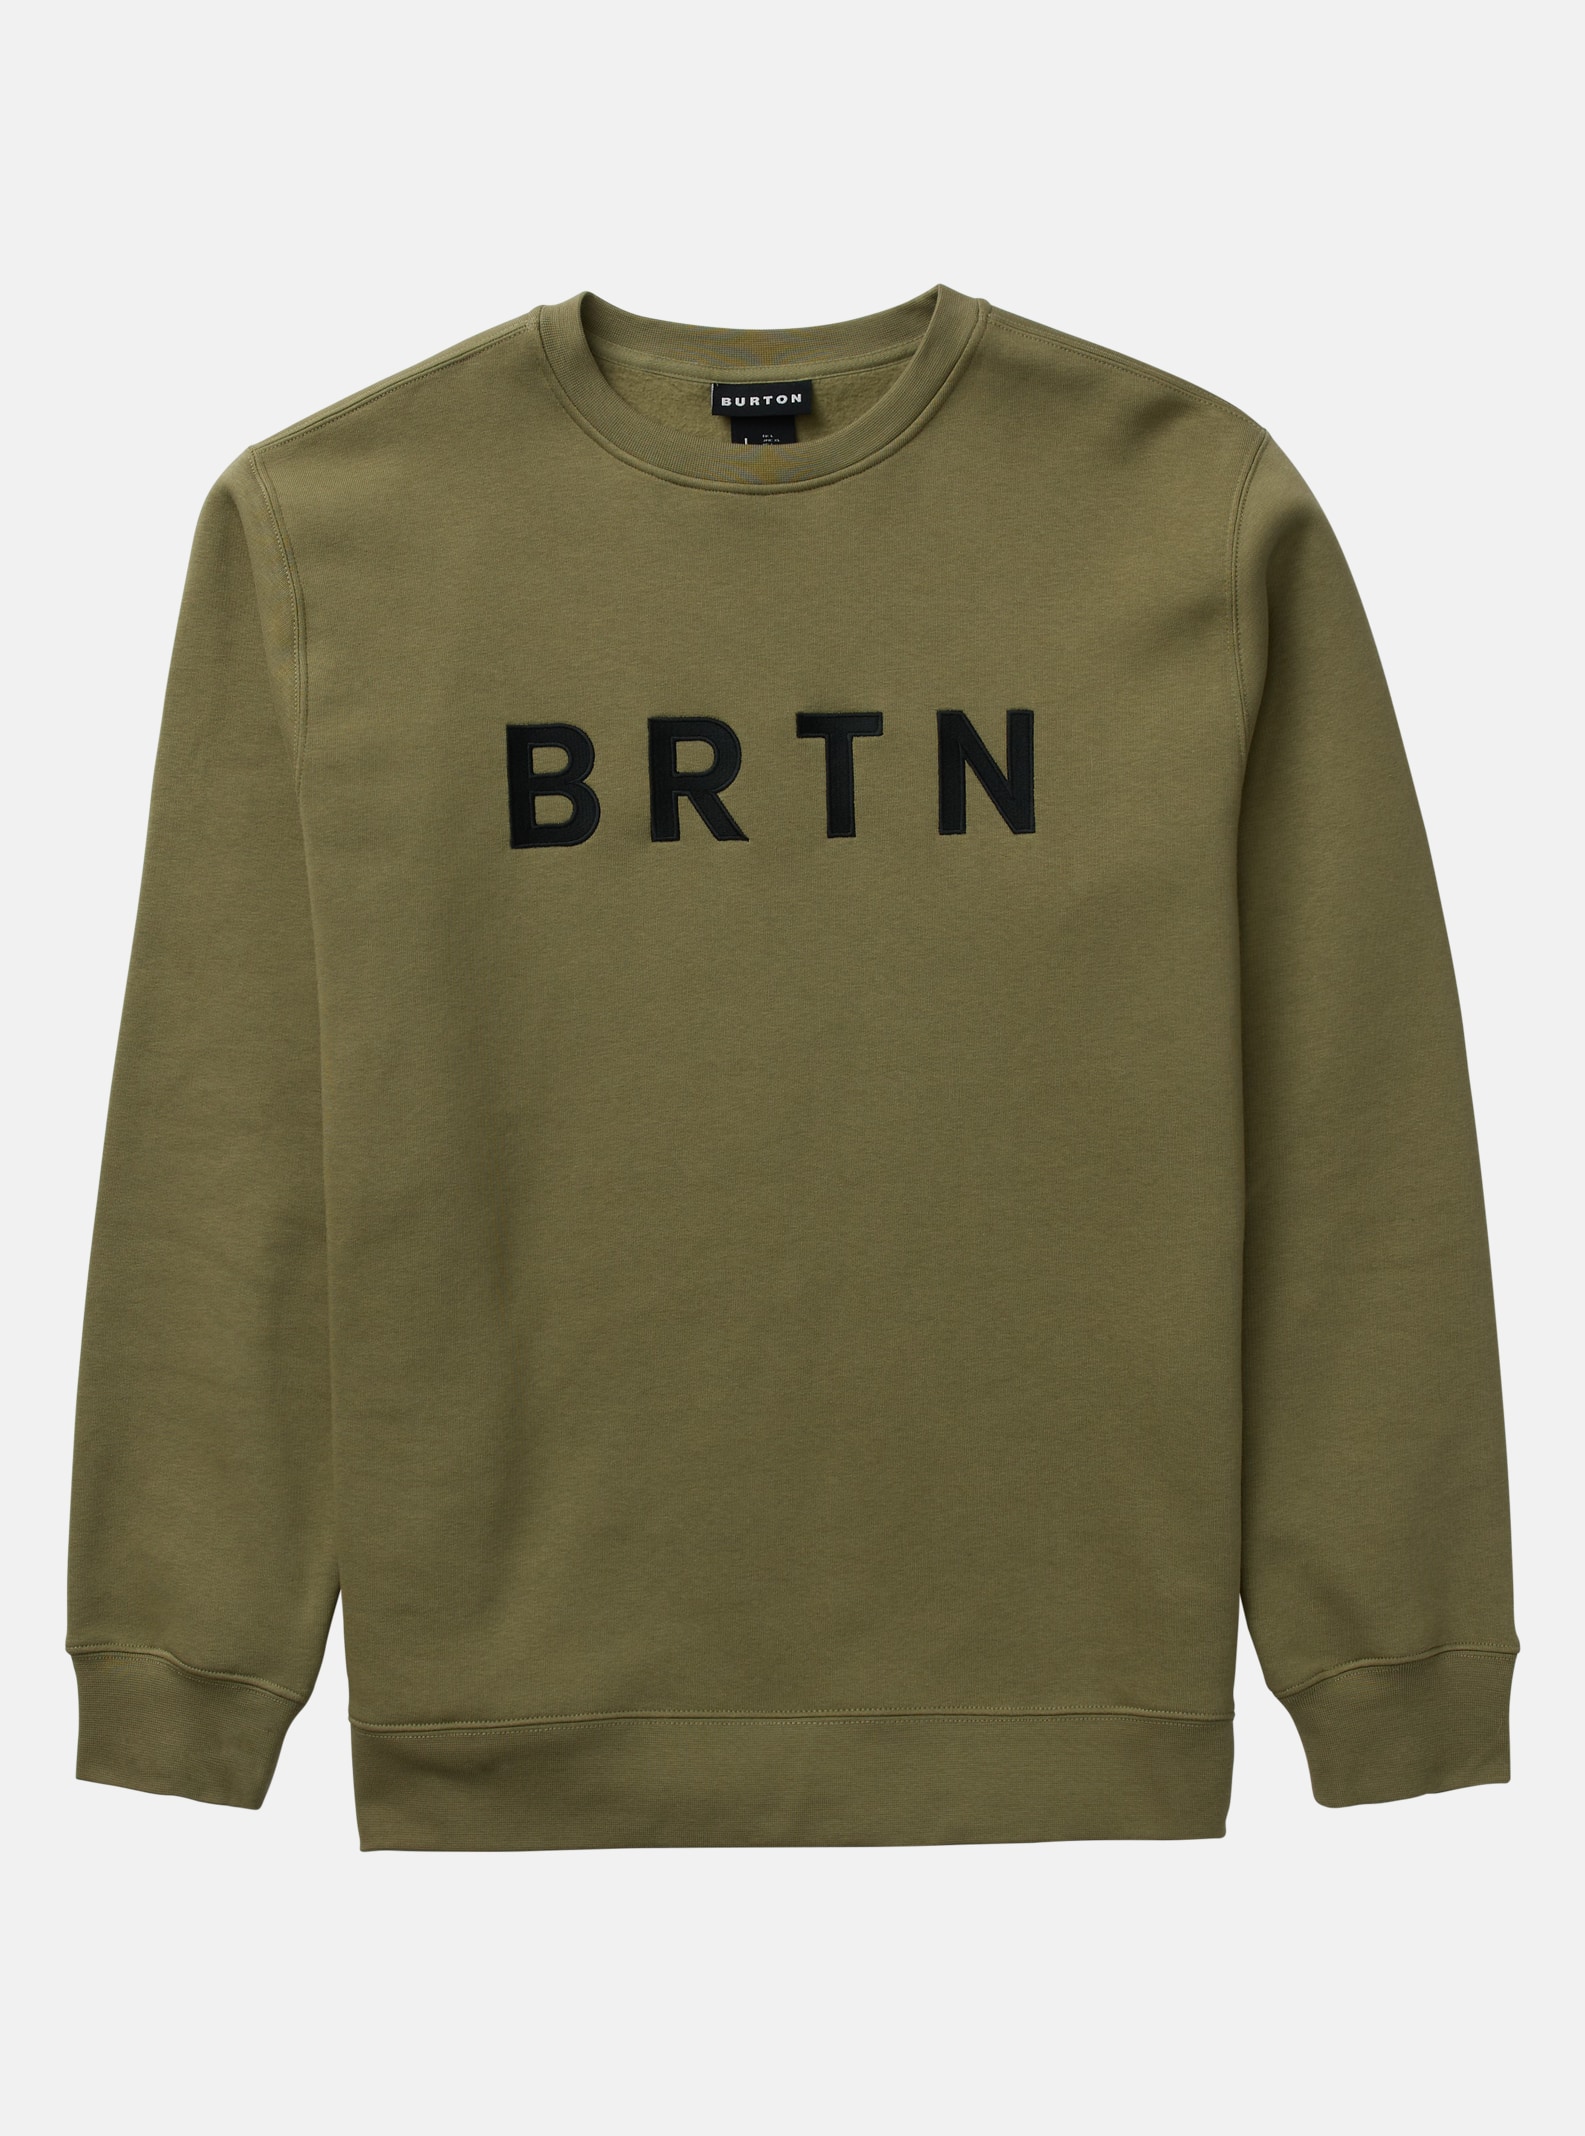 Burton Sweatshirt - BRTN Crewneck, Forest Moss, XXL